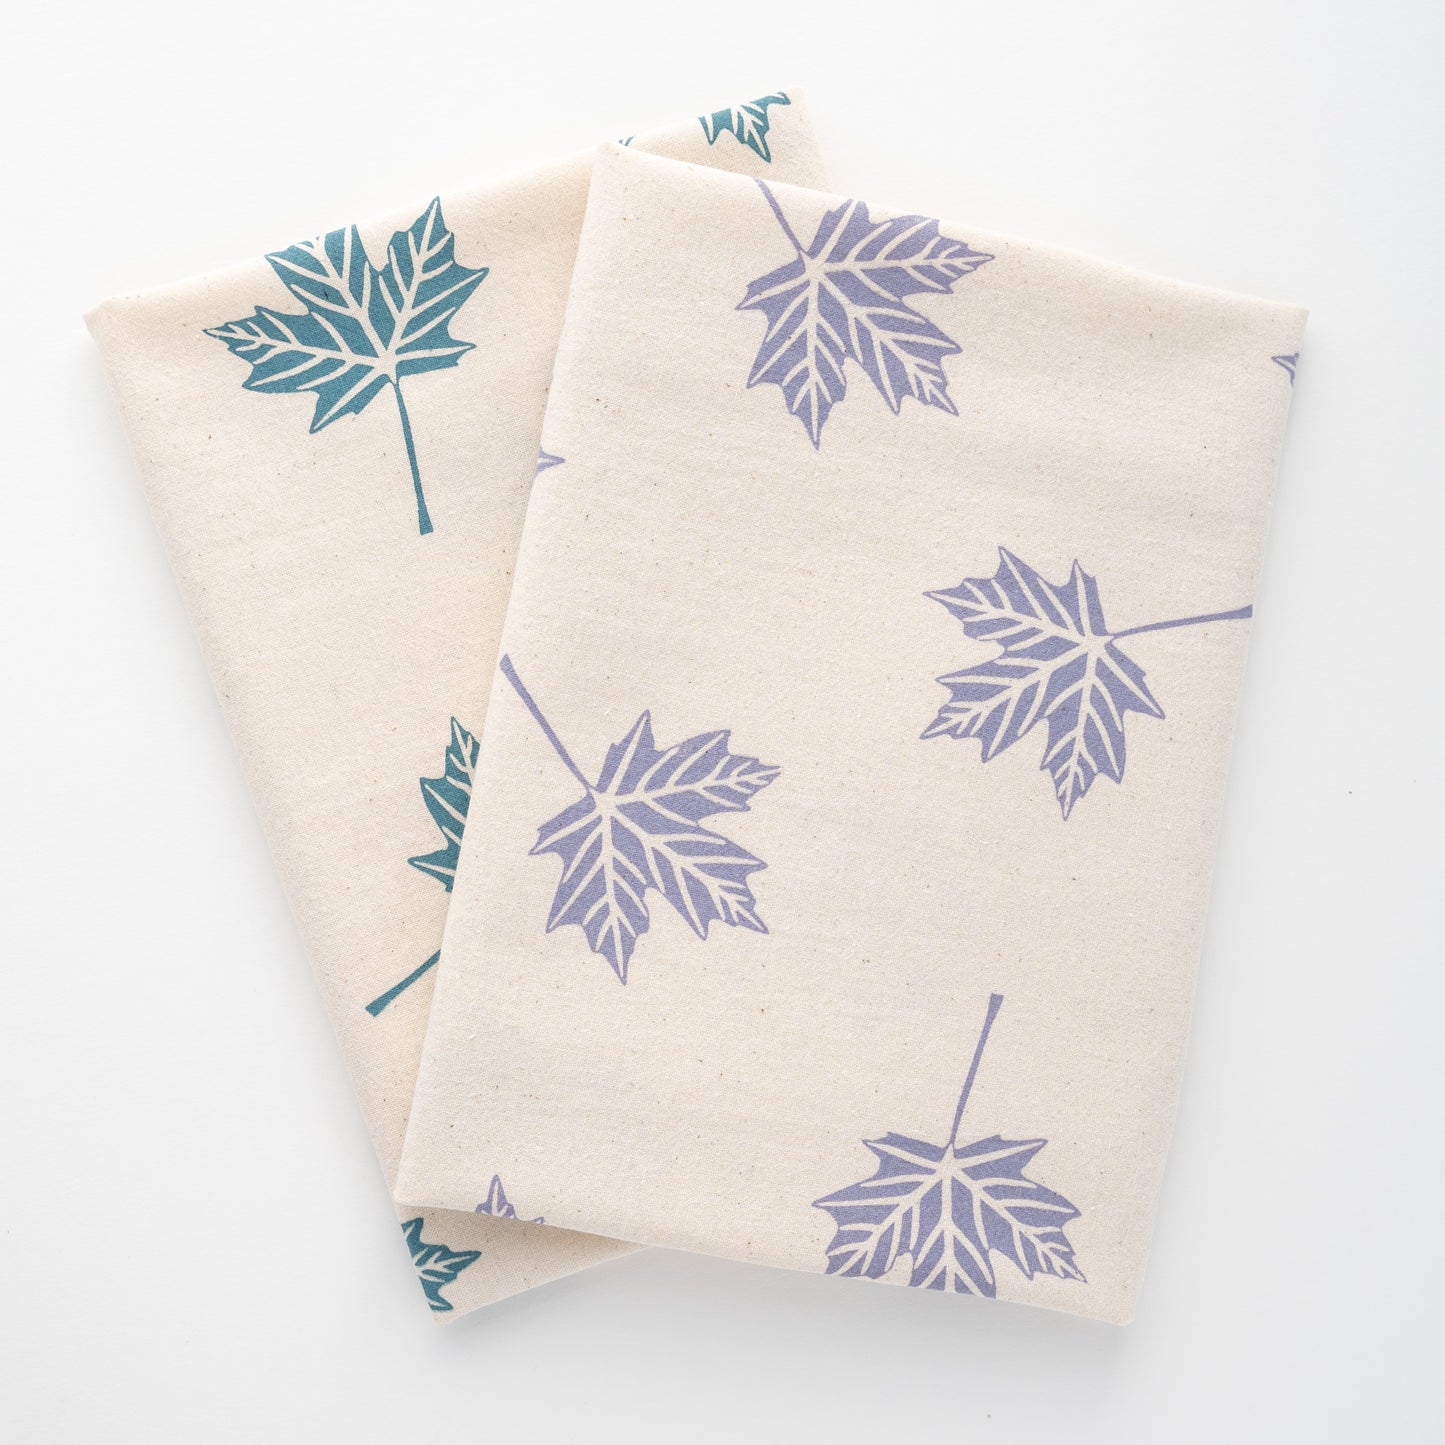 Blue and lavender printed maple leaf tea towels